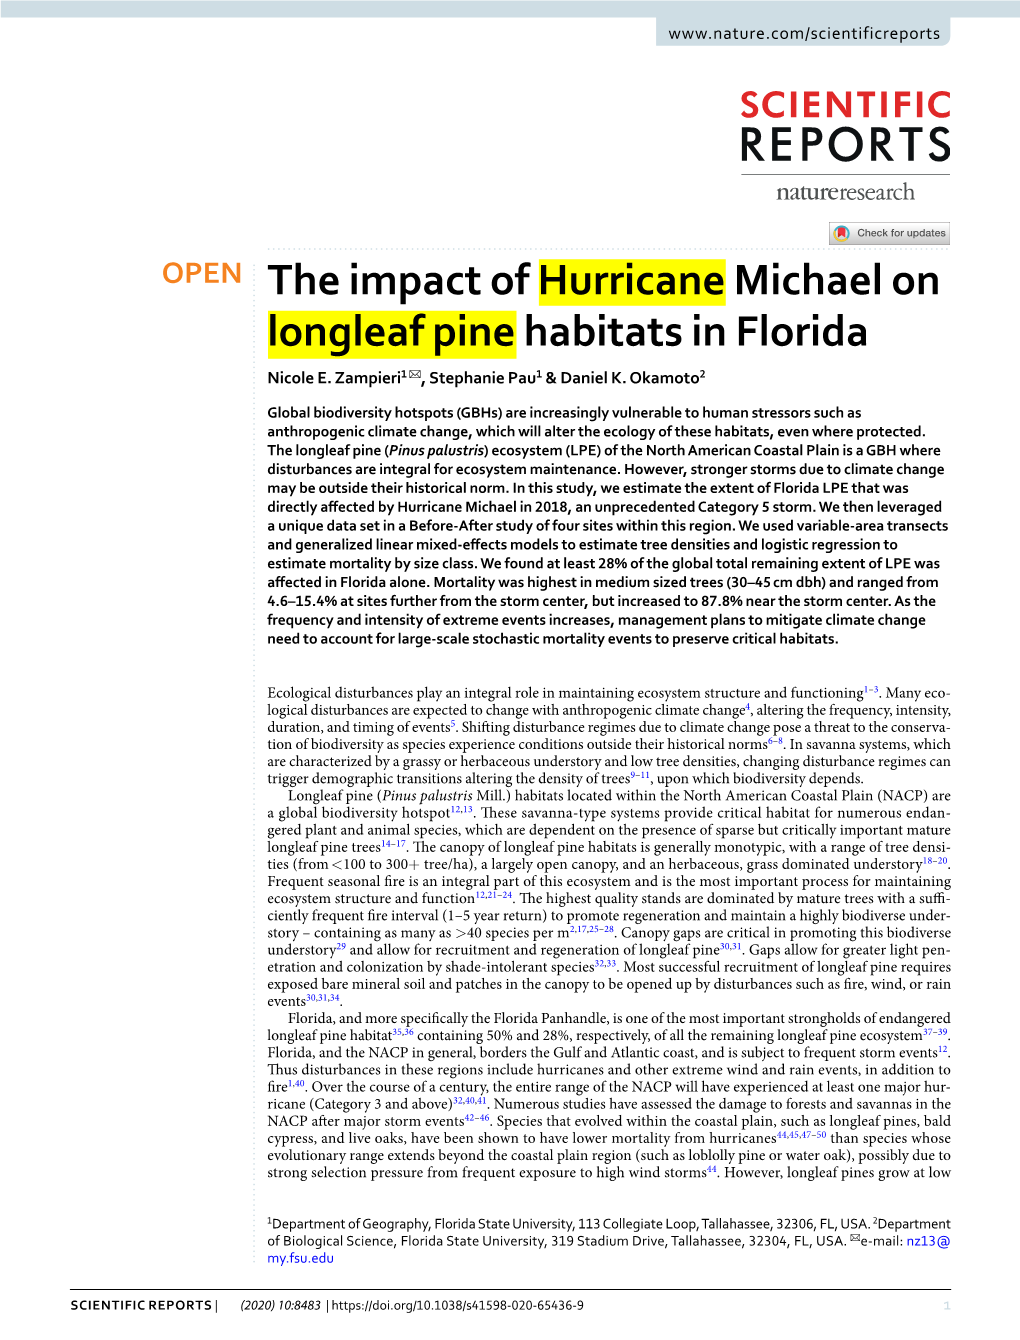 The Impact of Hurricane Michael on Longleaf Pine Habitats in Florida Nicole E